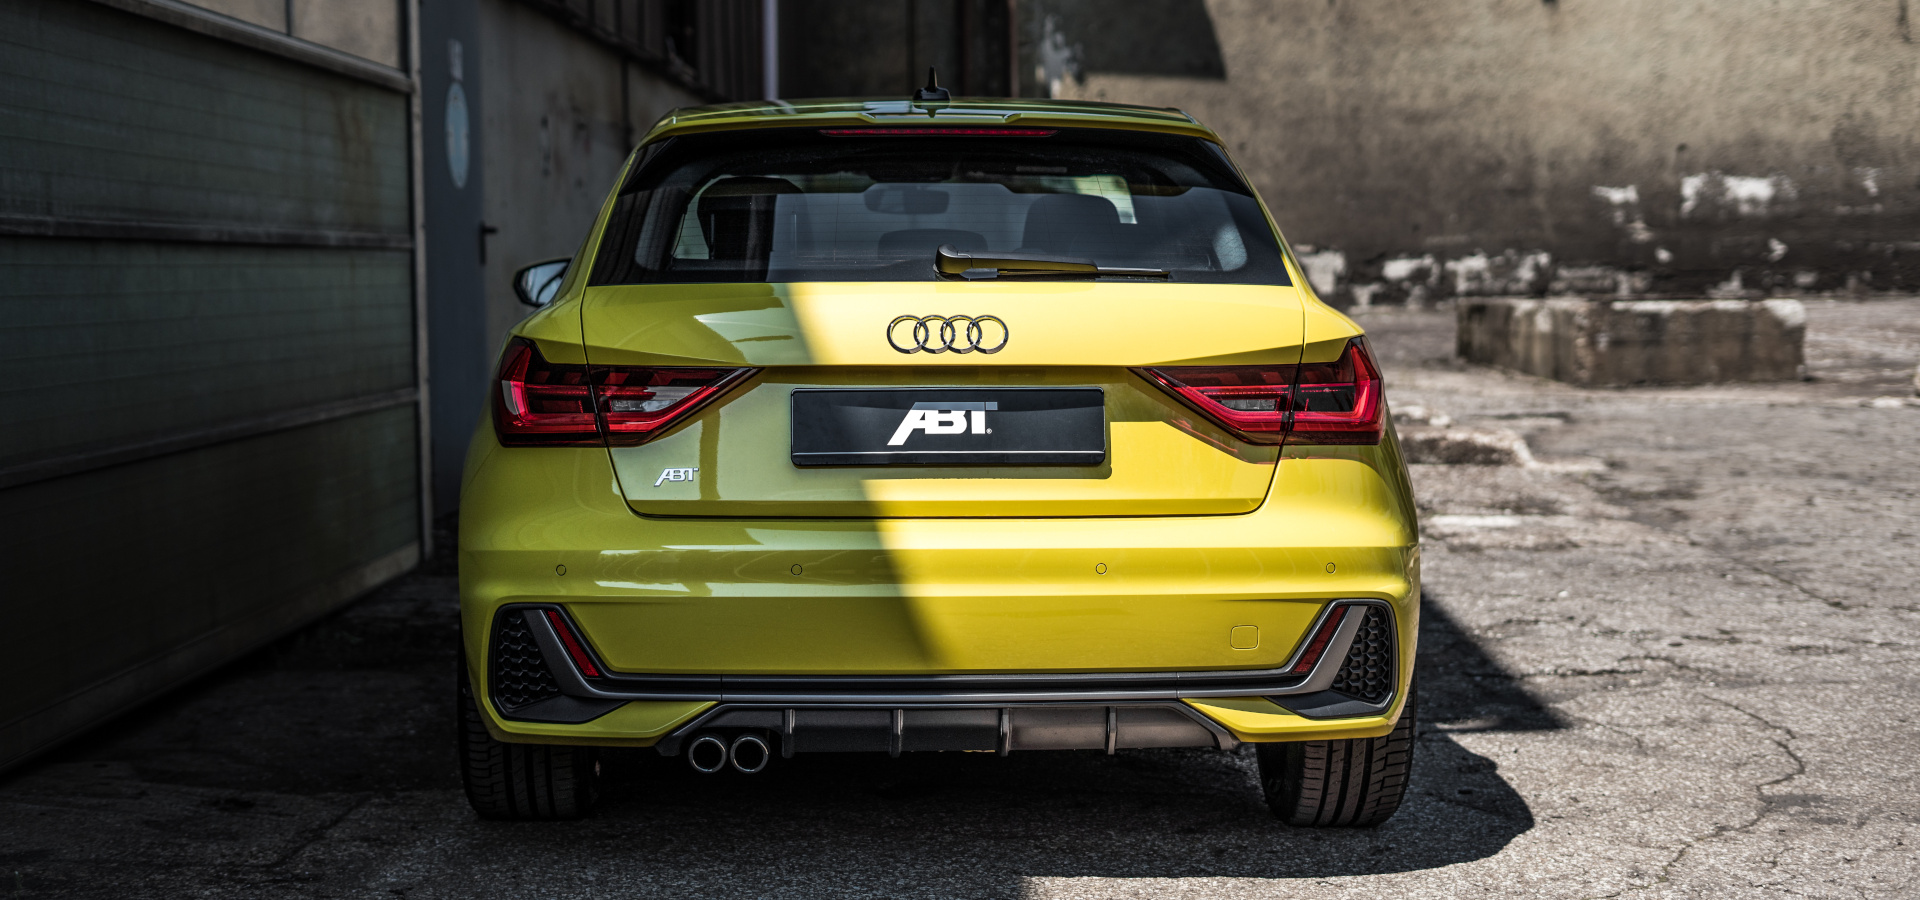 Audi A1 Abt Sportsline